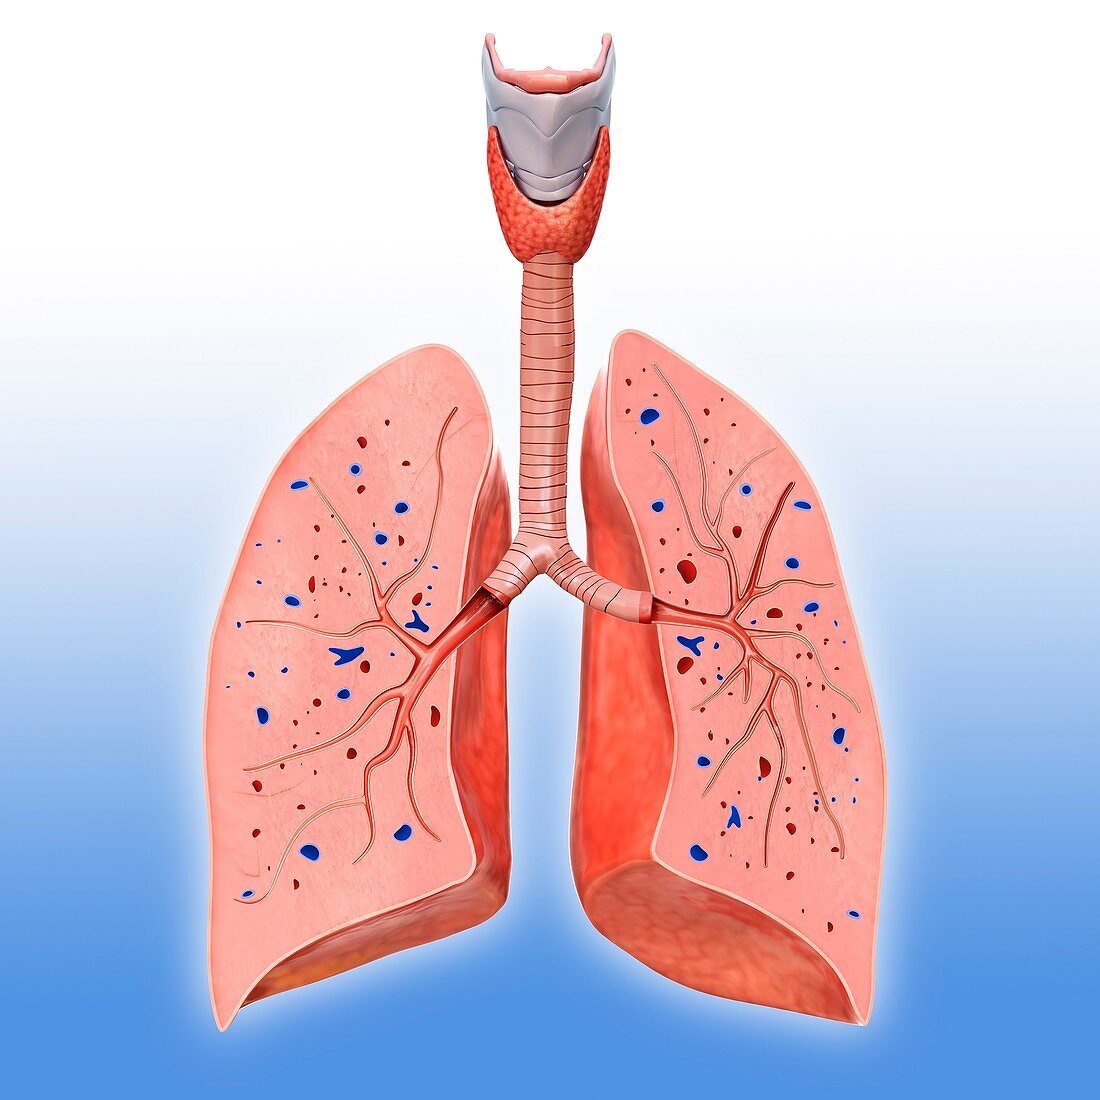 Human lung anatomy, illustration